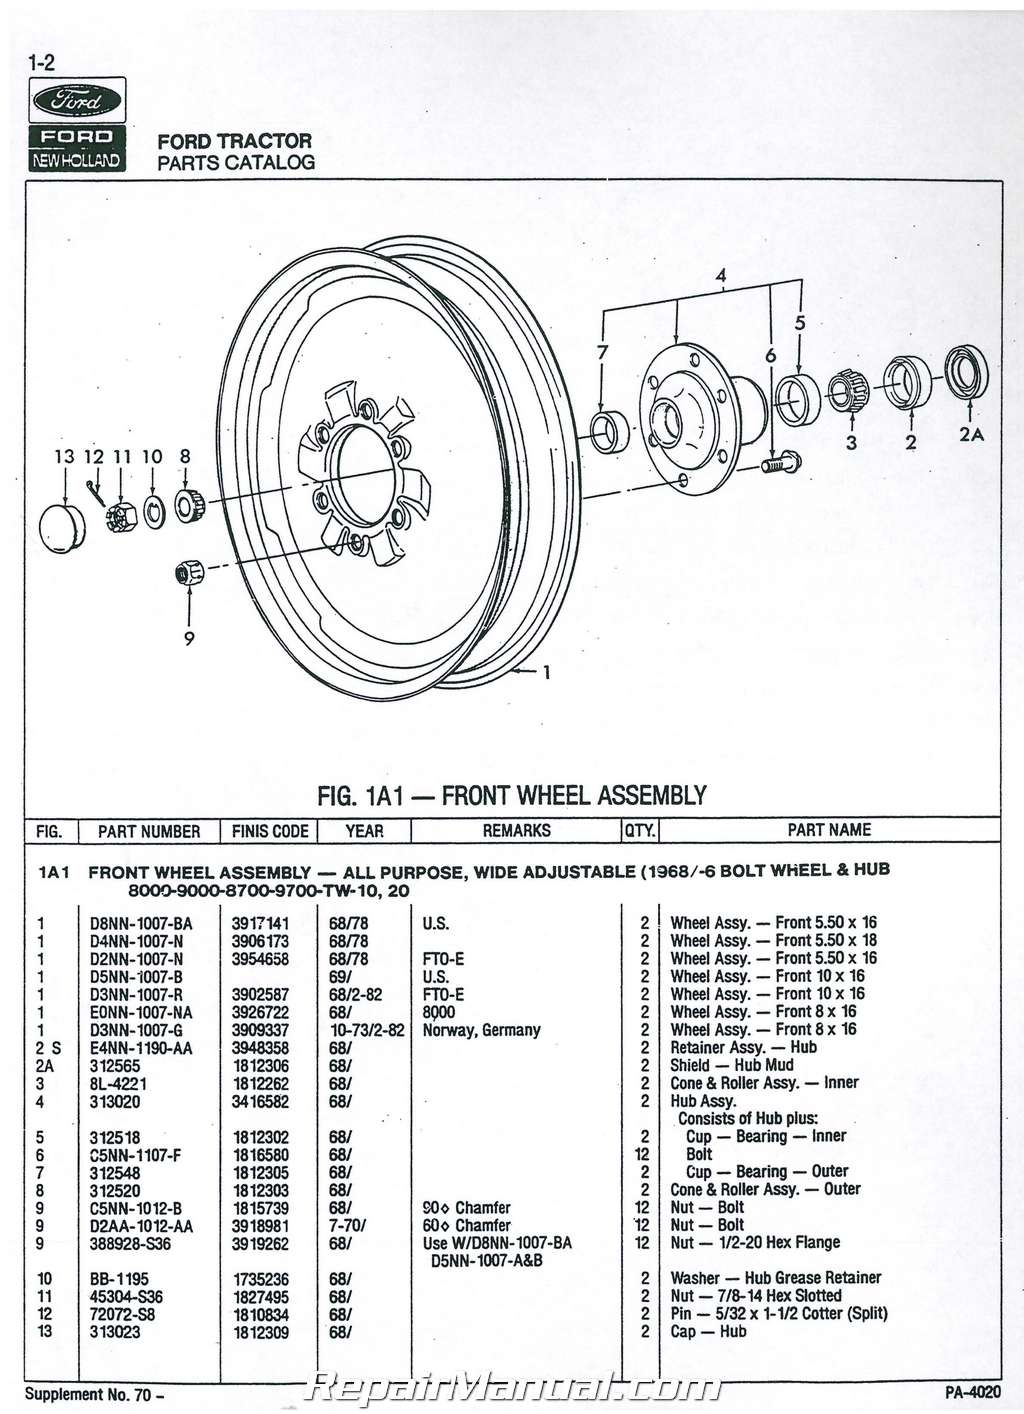 gearco 8400 transmission manual